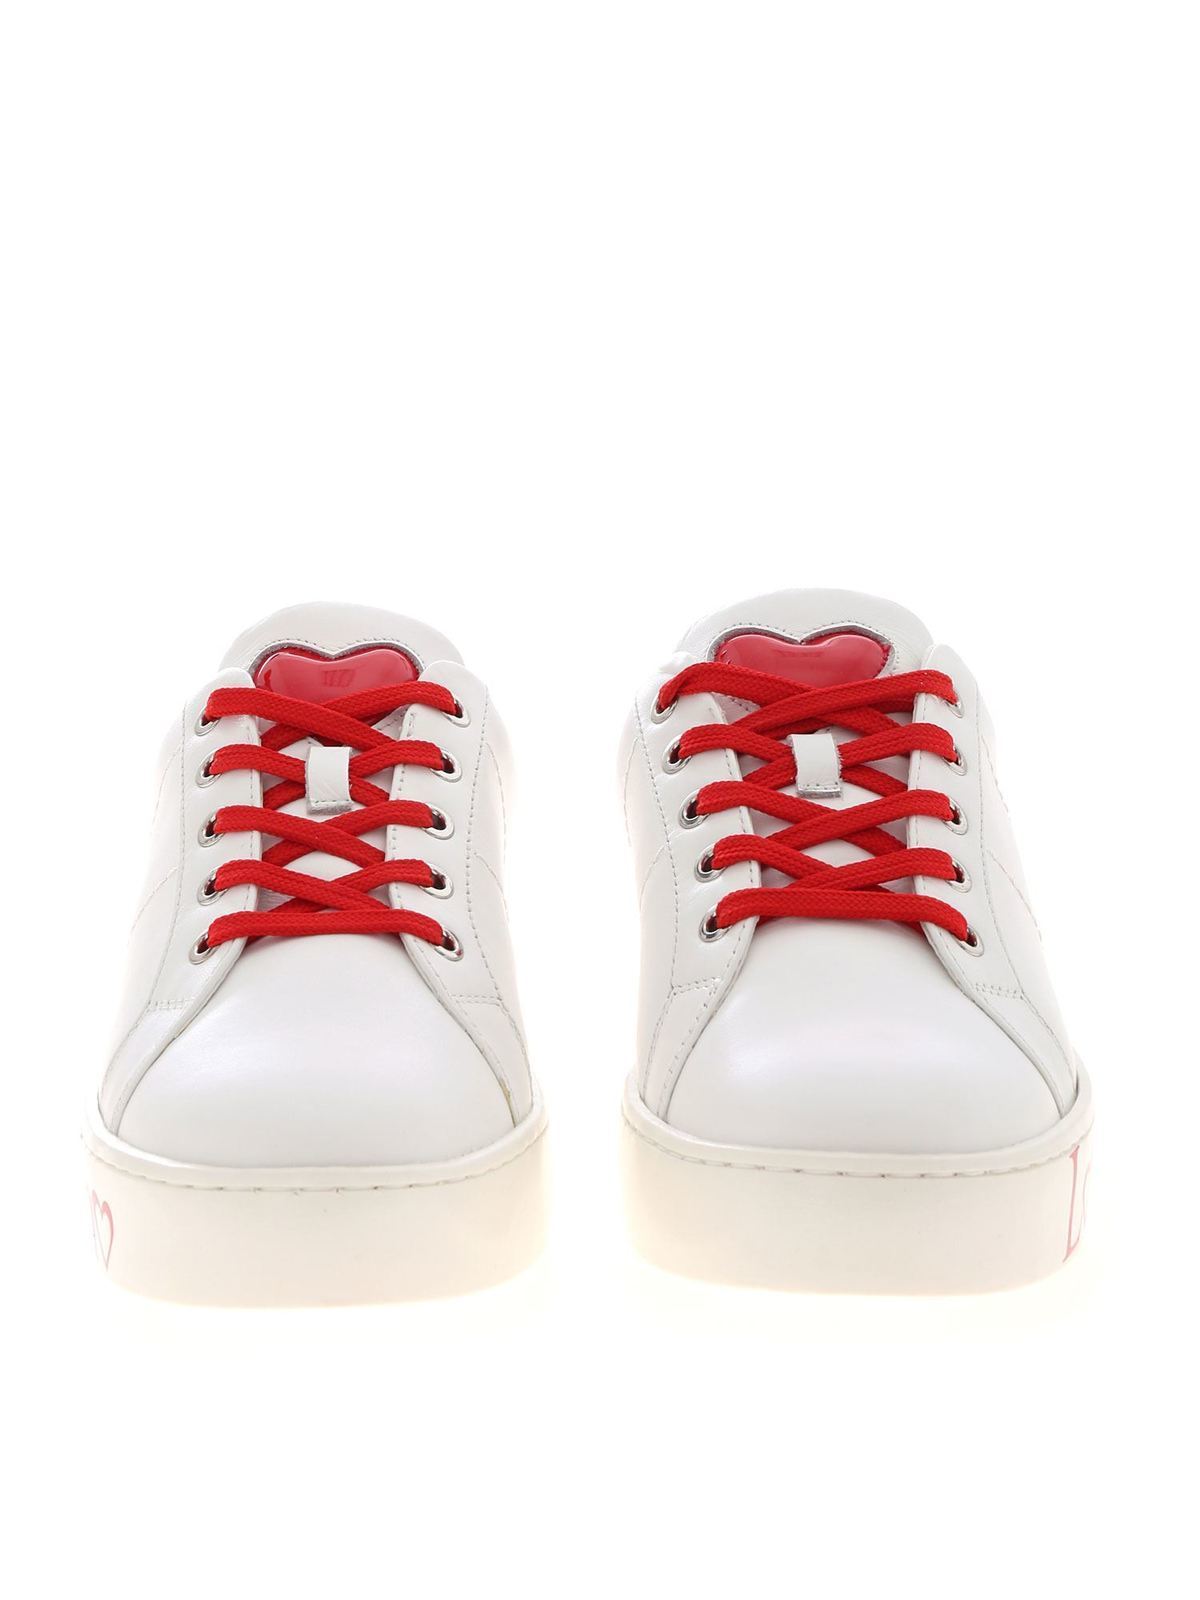 scarpe love moschino rosse